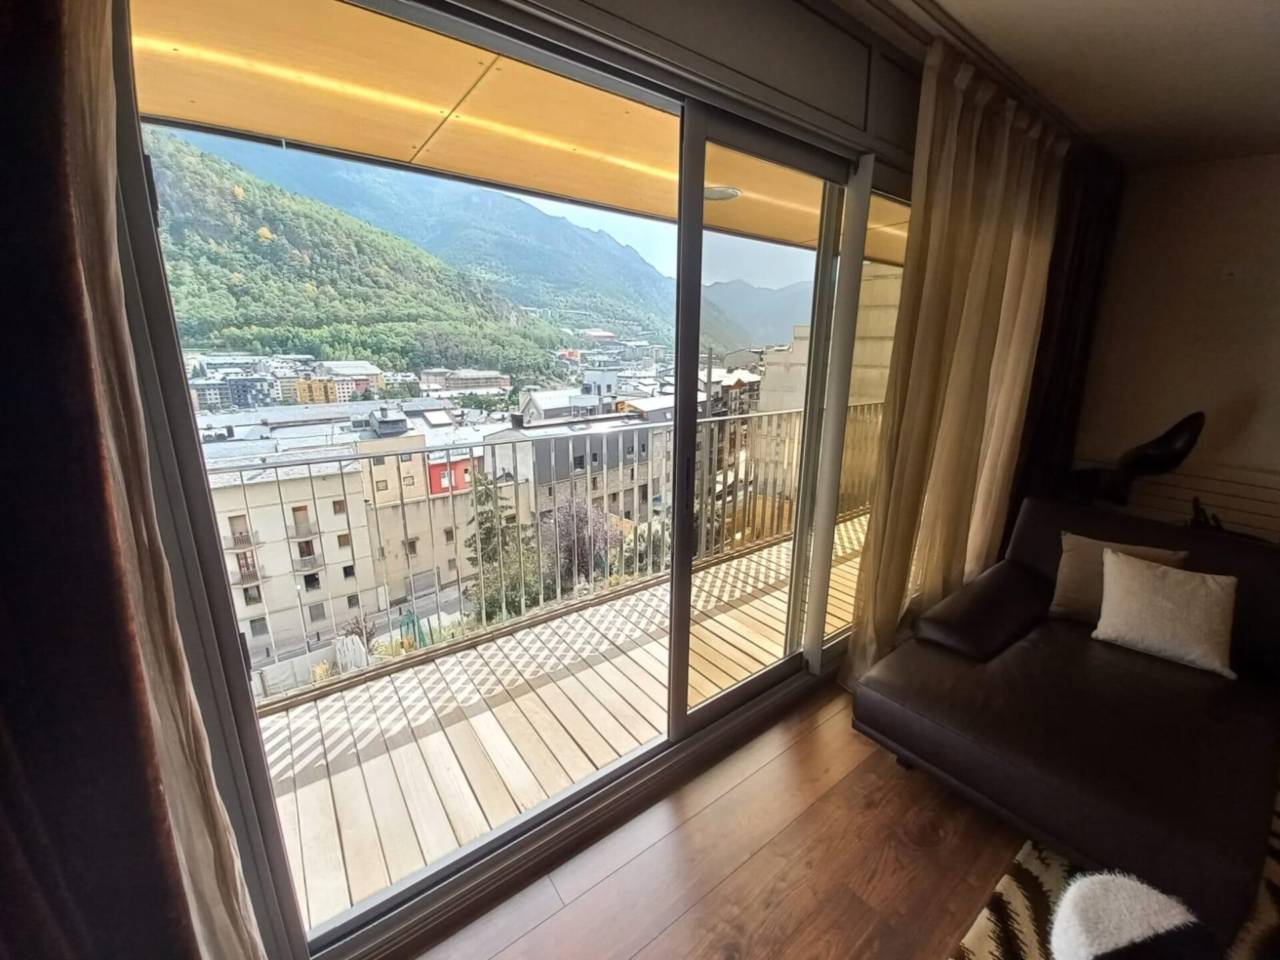 Exclusiu pis en venda a Andorra la Vella